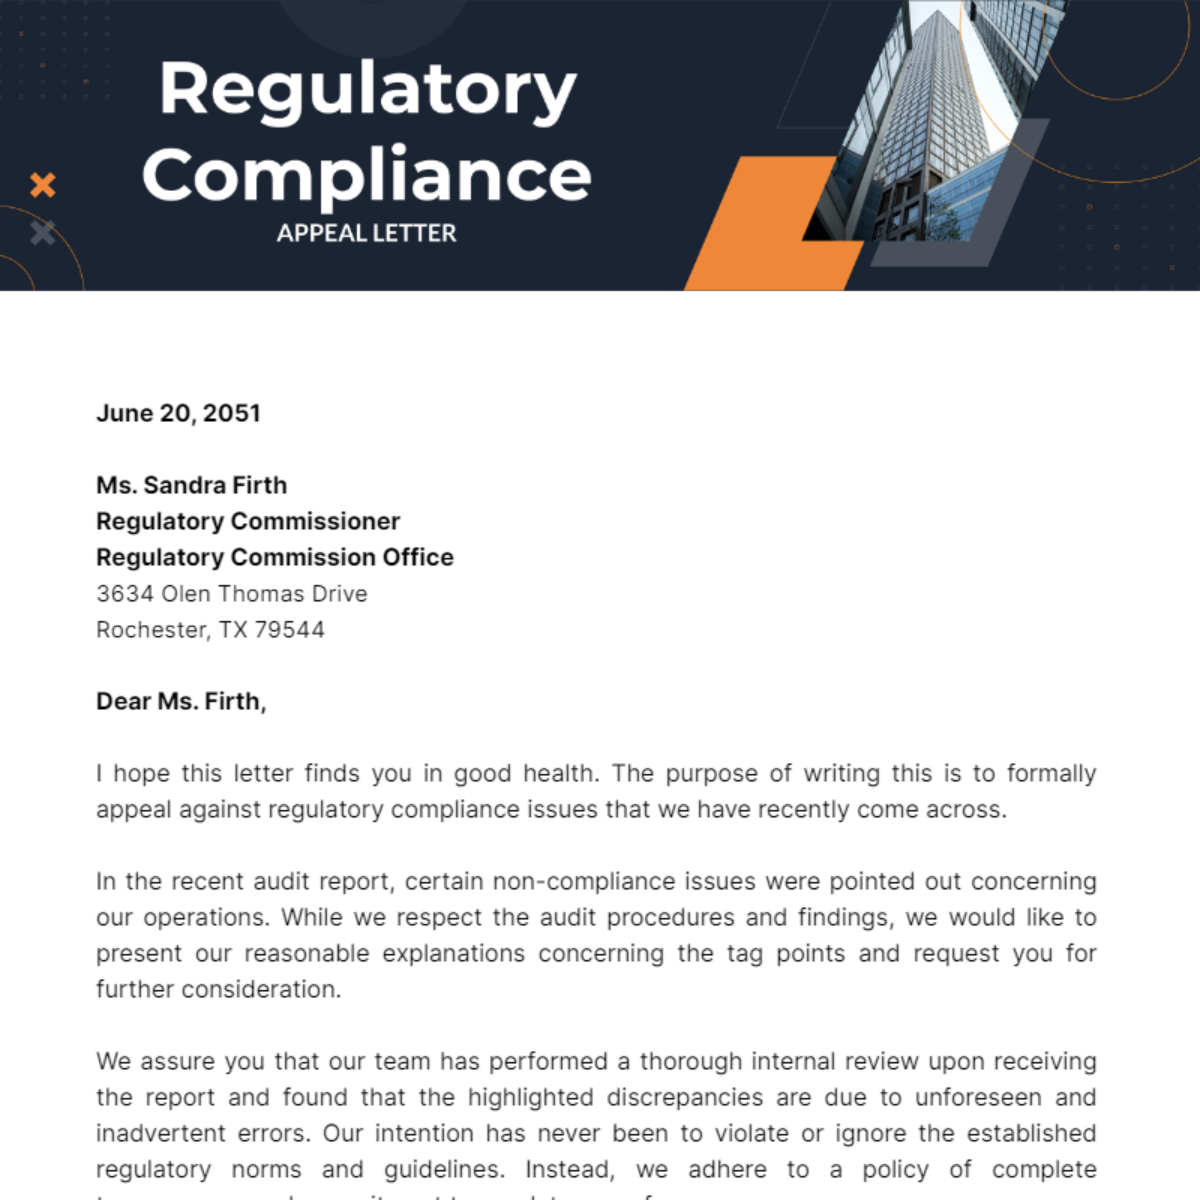 Regulatory Compliance Appeal Letter Template